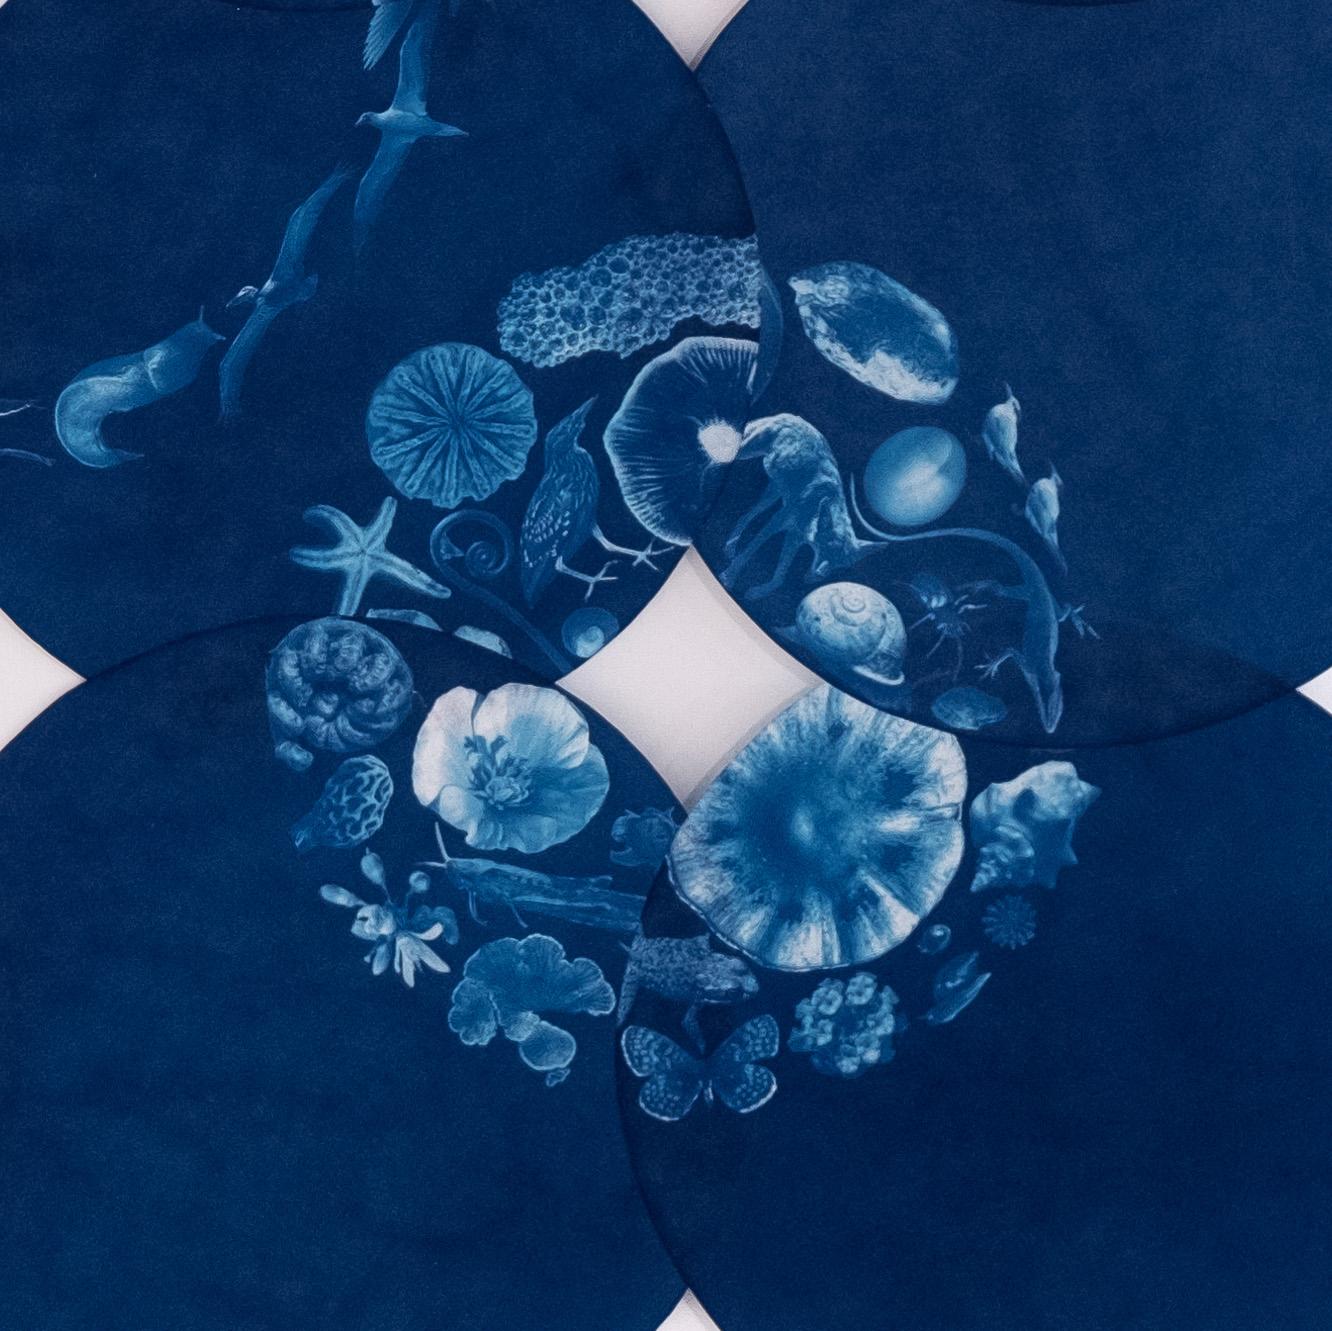 An Alternative Cyanotype on Hahnemuhle Sumi-E Paper, 